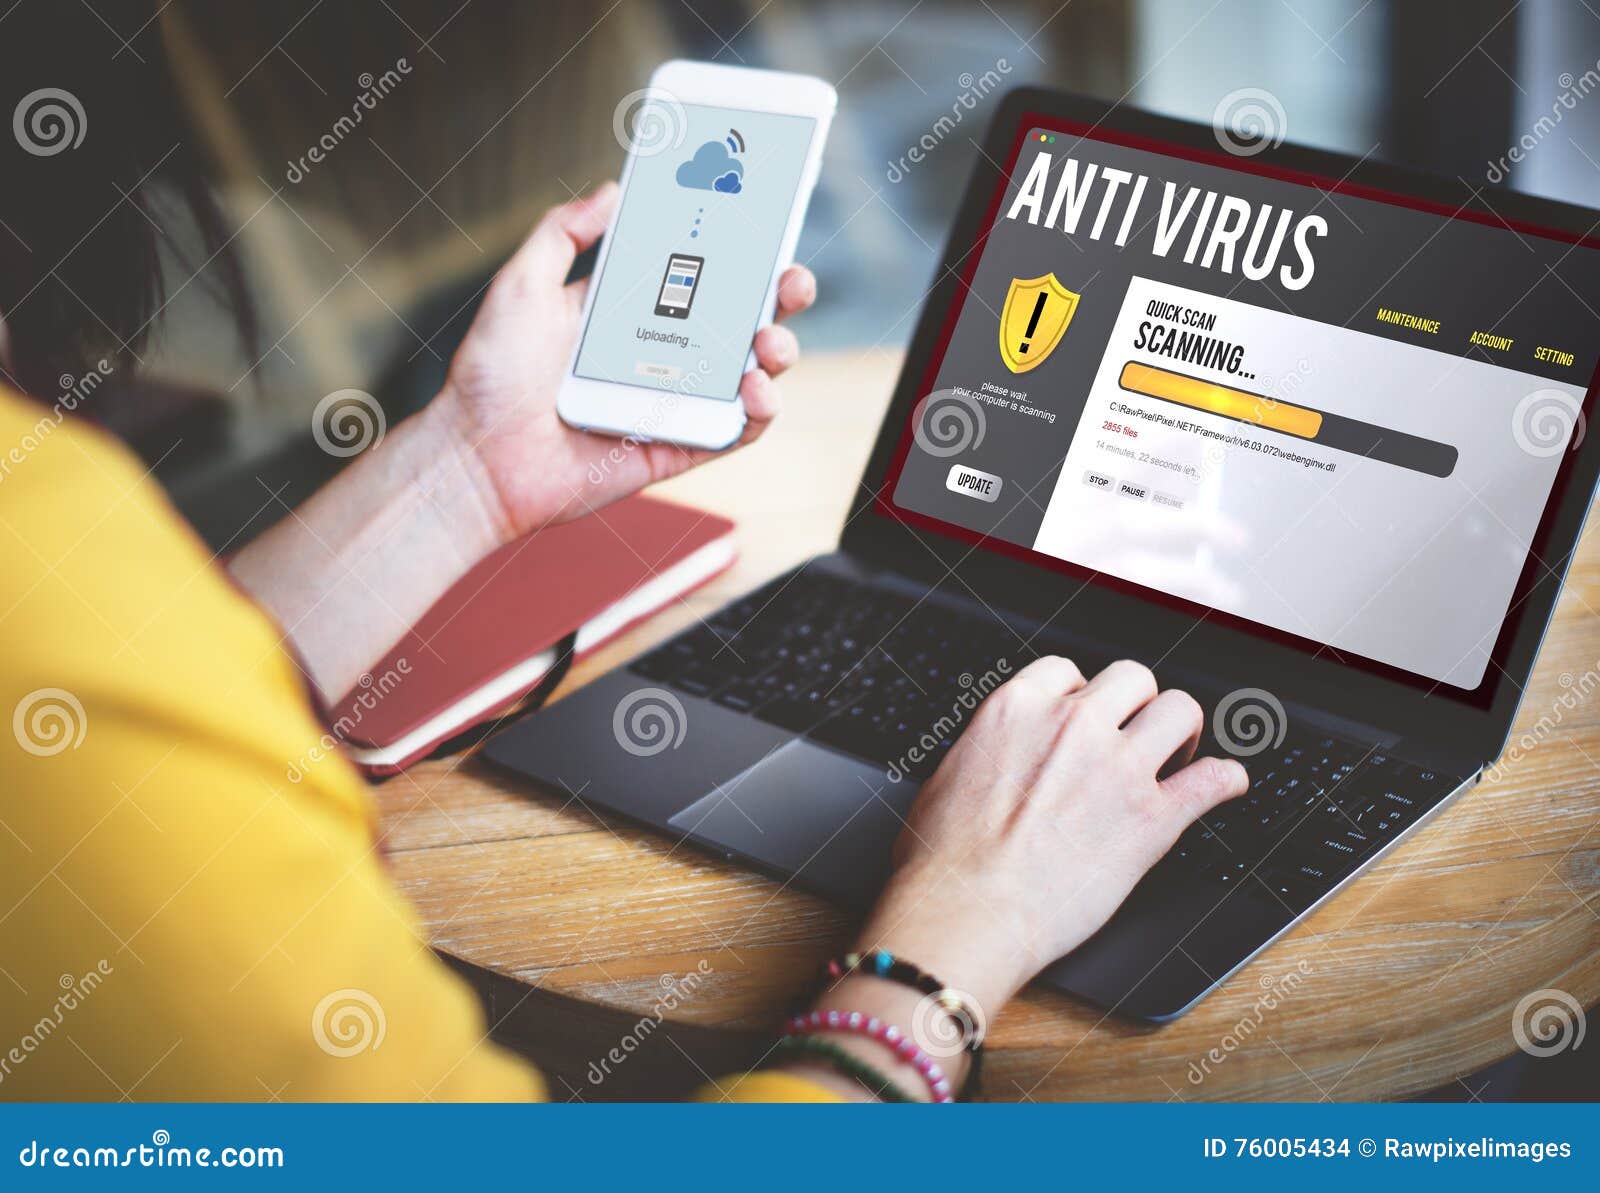 antivirus alert firewall hacker protection safety concept